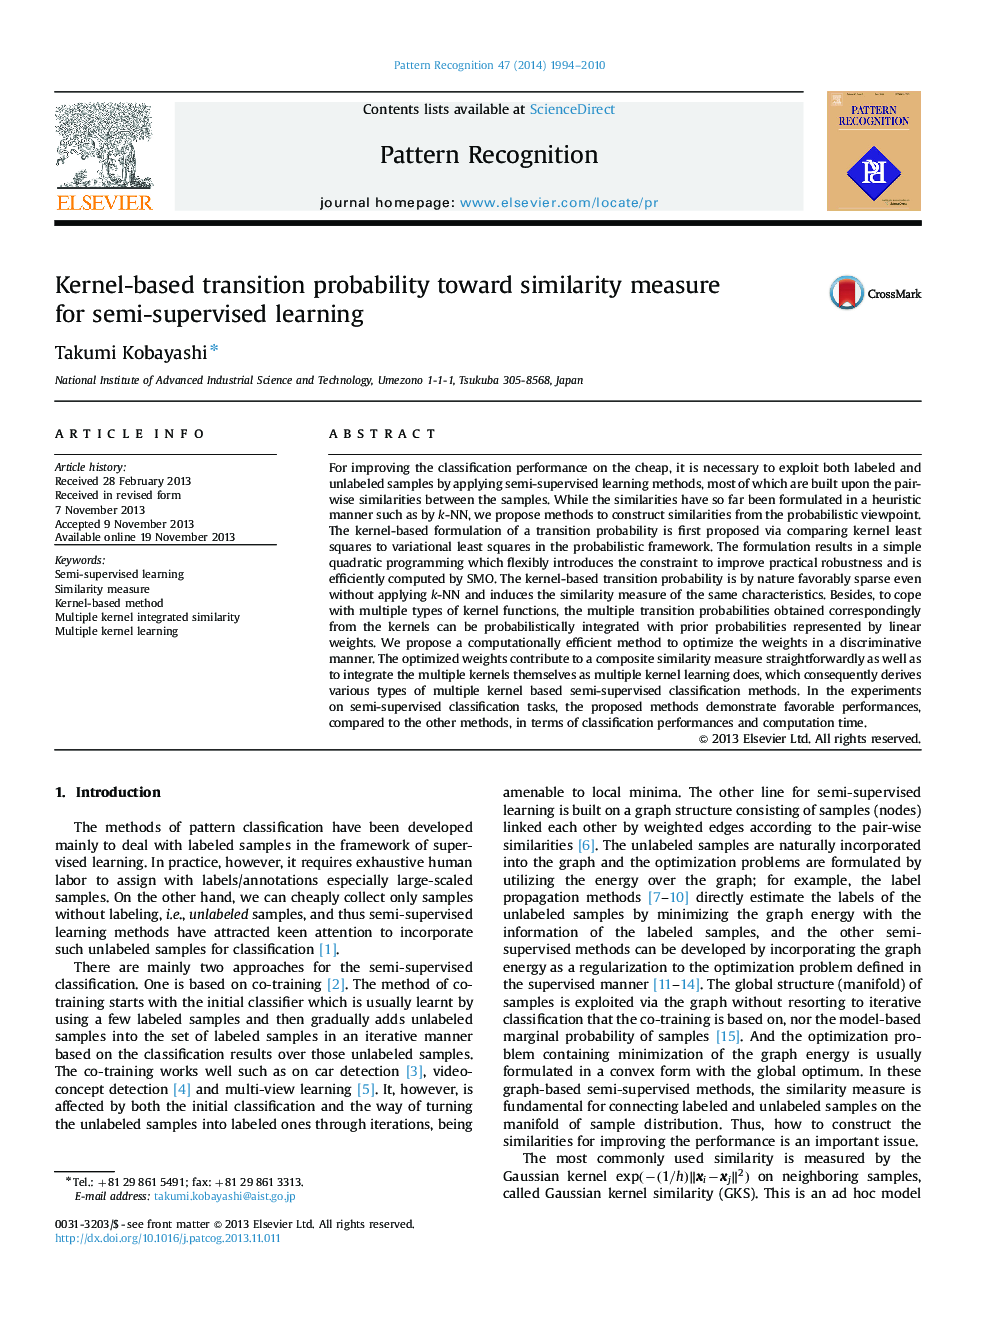 Kernel-based transition probability toward similarity measure for semi-supervised learning